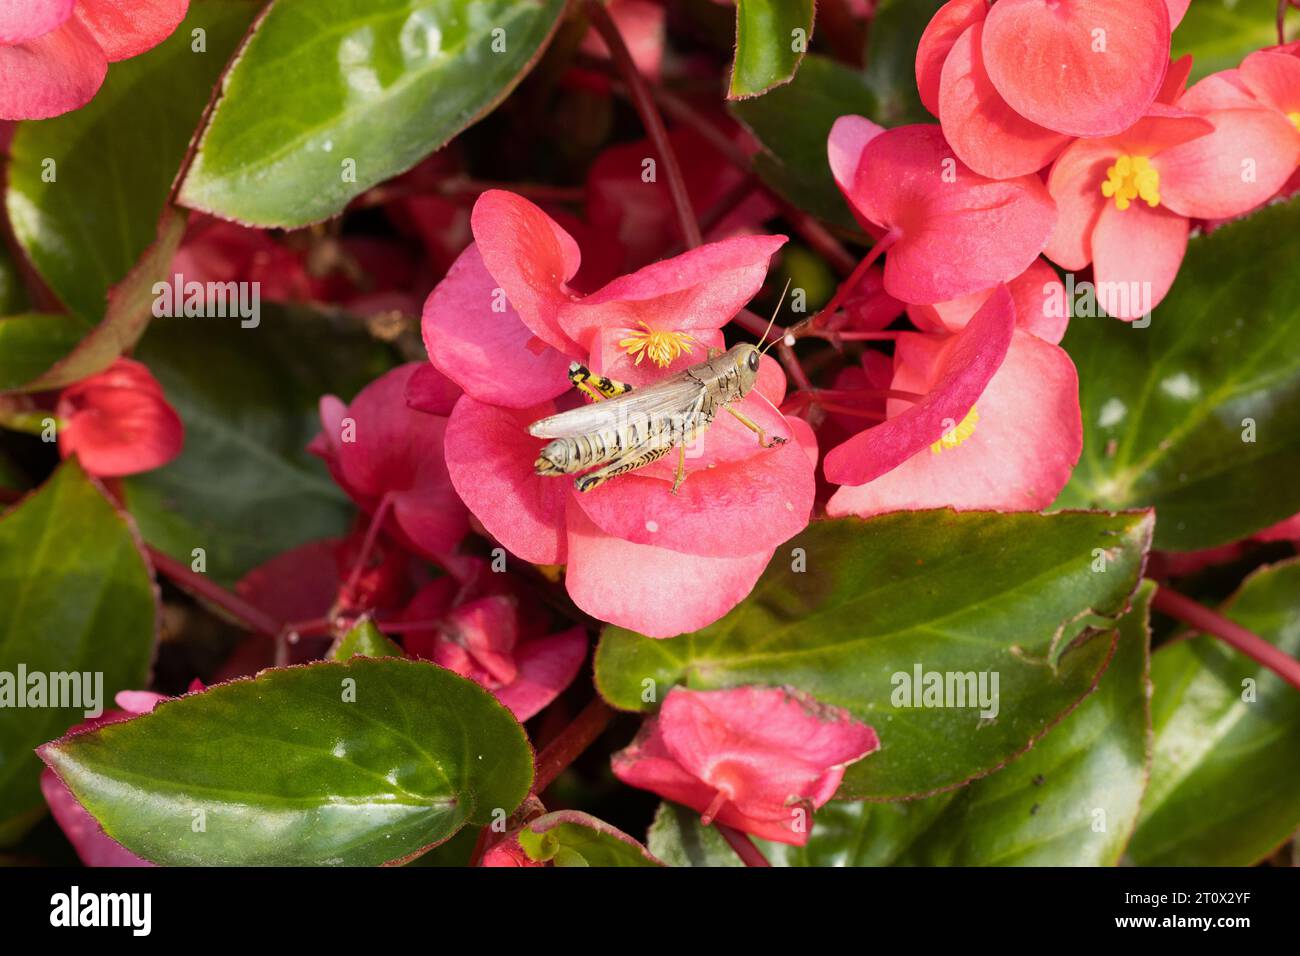 A grasshopper on a Begonia Viking Explorer Rose on Green begonia flowers. Stock Photo